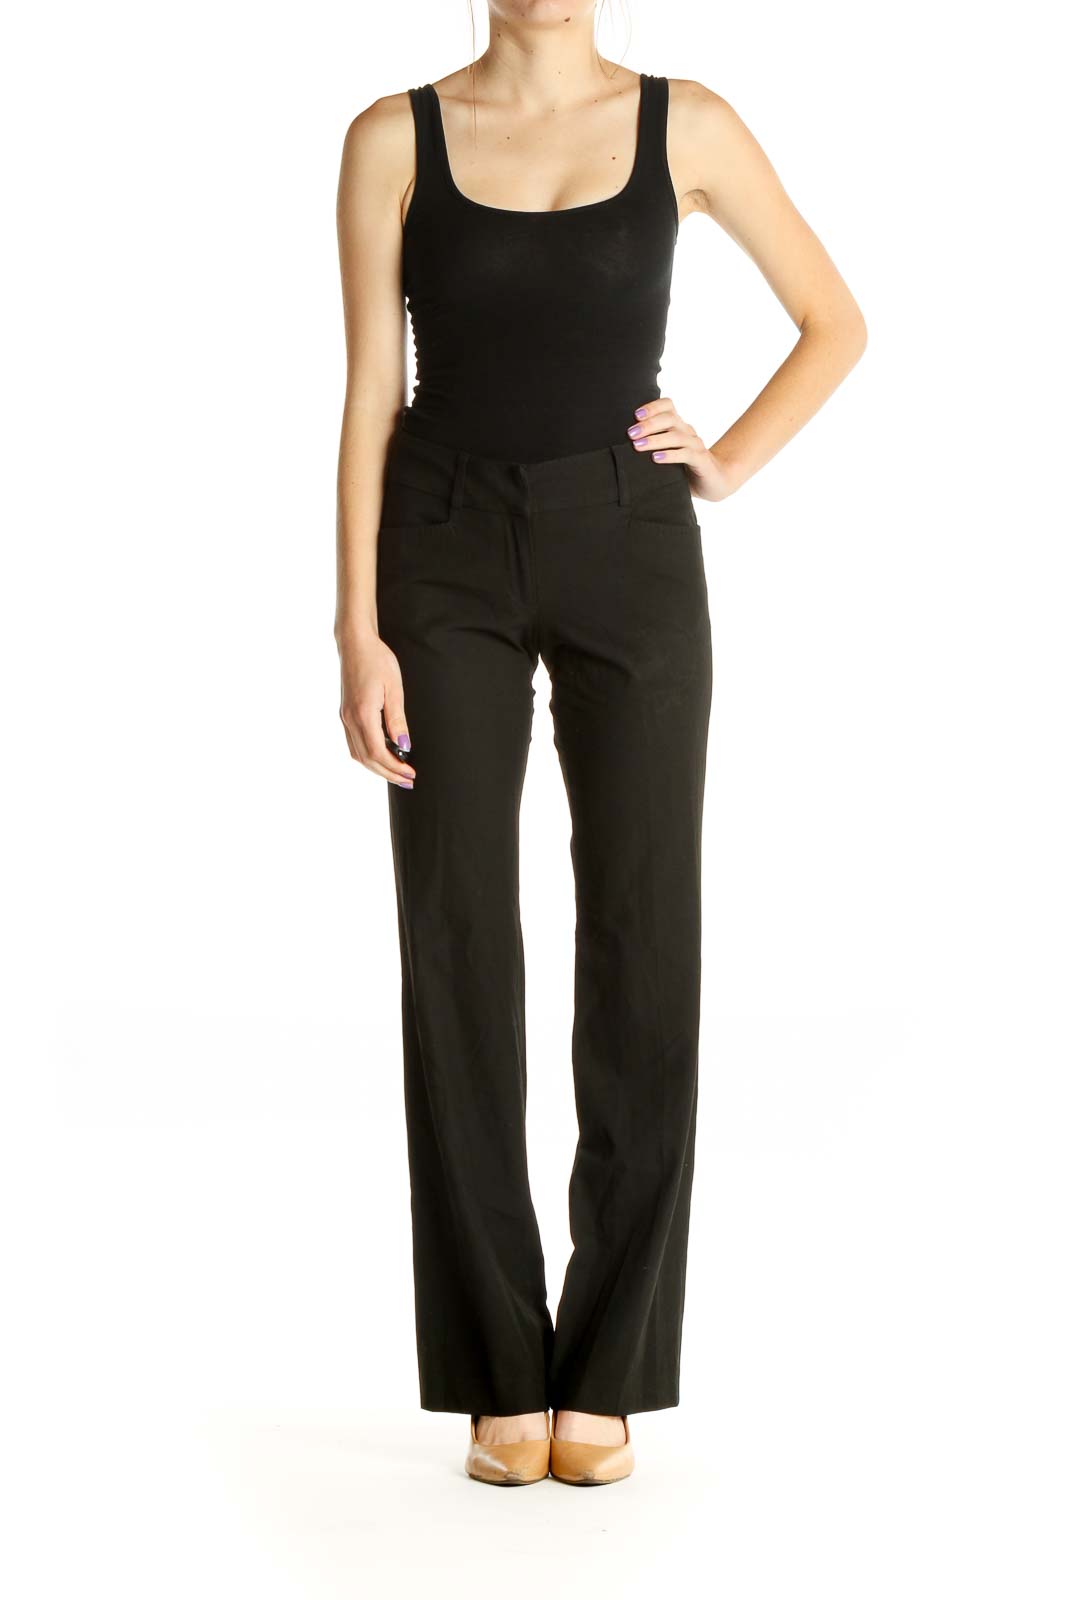 MICHAEL KORS WOMENS Trousers Size Large Brand New Colour Black £51.00 -  PicClick UK